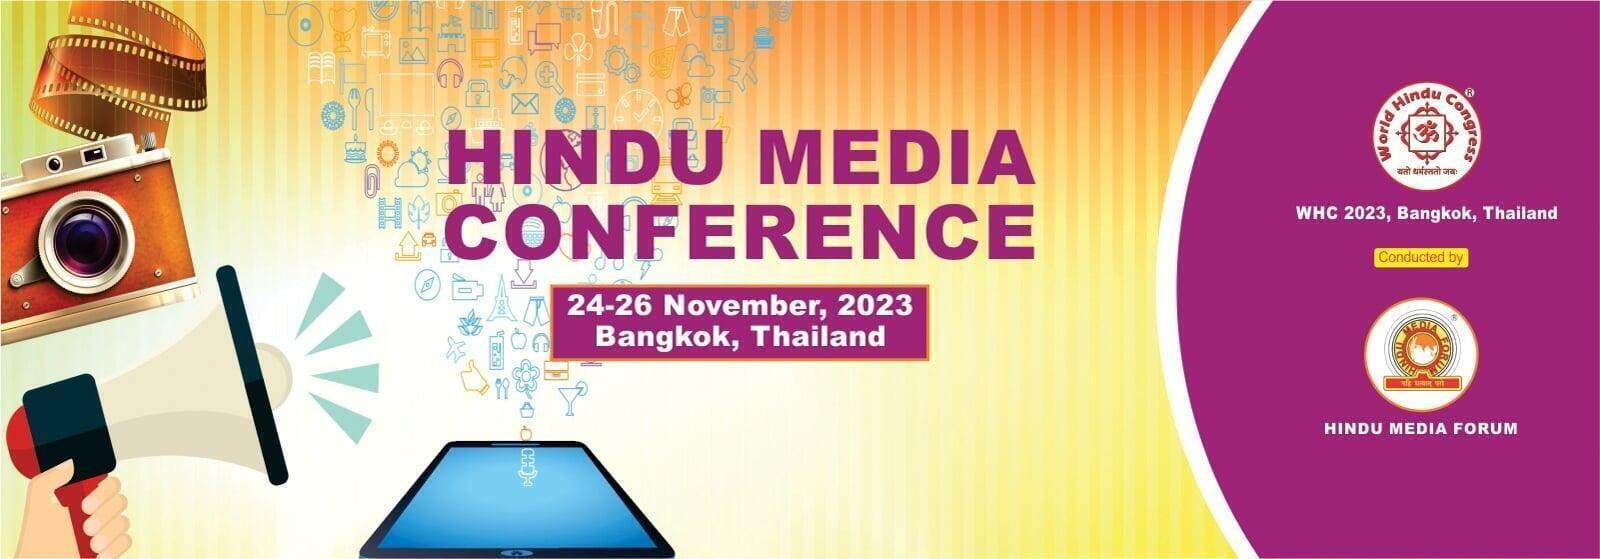 Hindu Media Conference @ WHC 2023